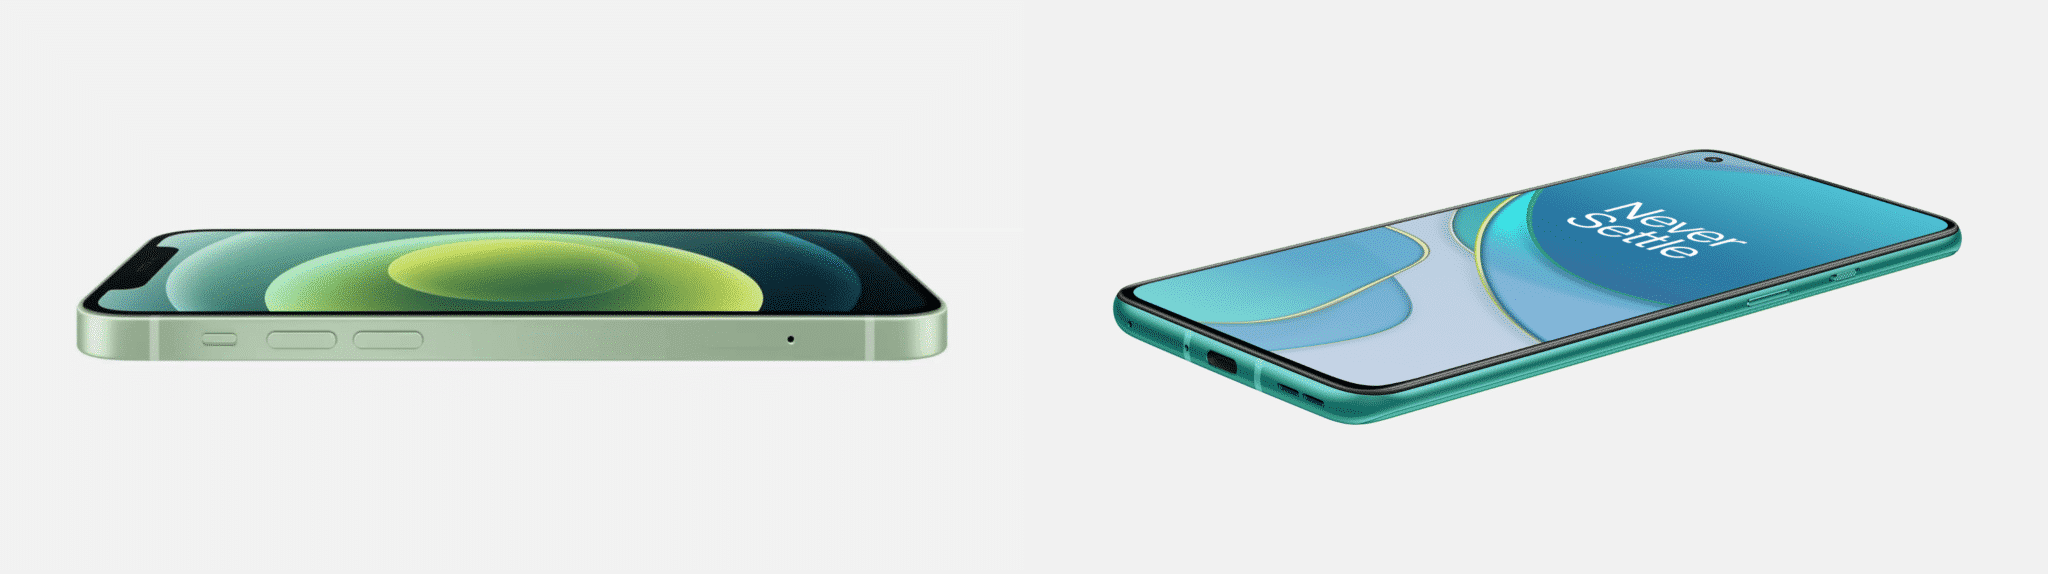 comparatif ecran OnePlus 8T iPhone 12